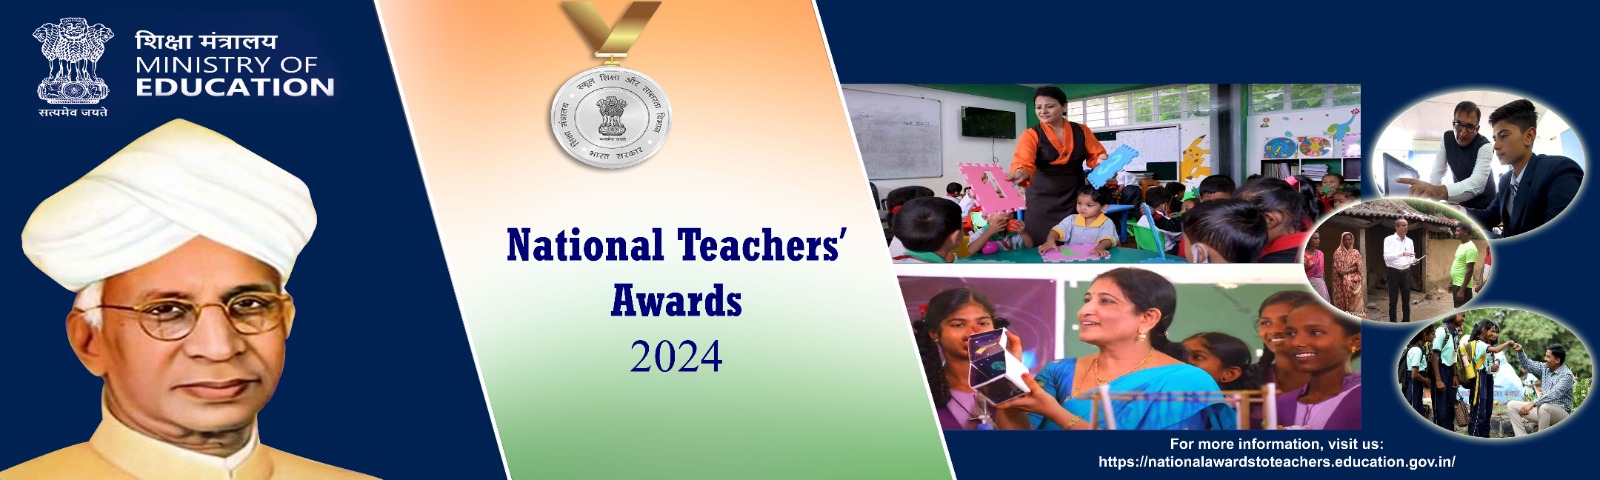 National Teachers Award 2024